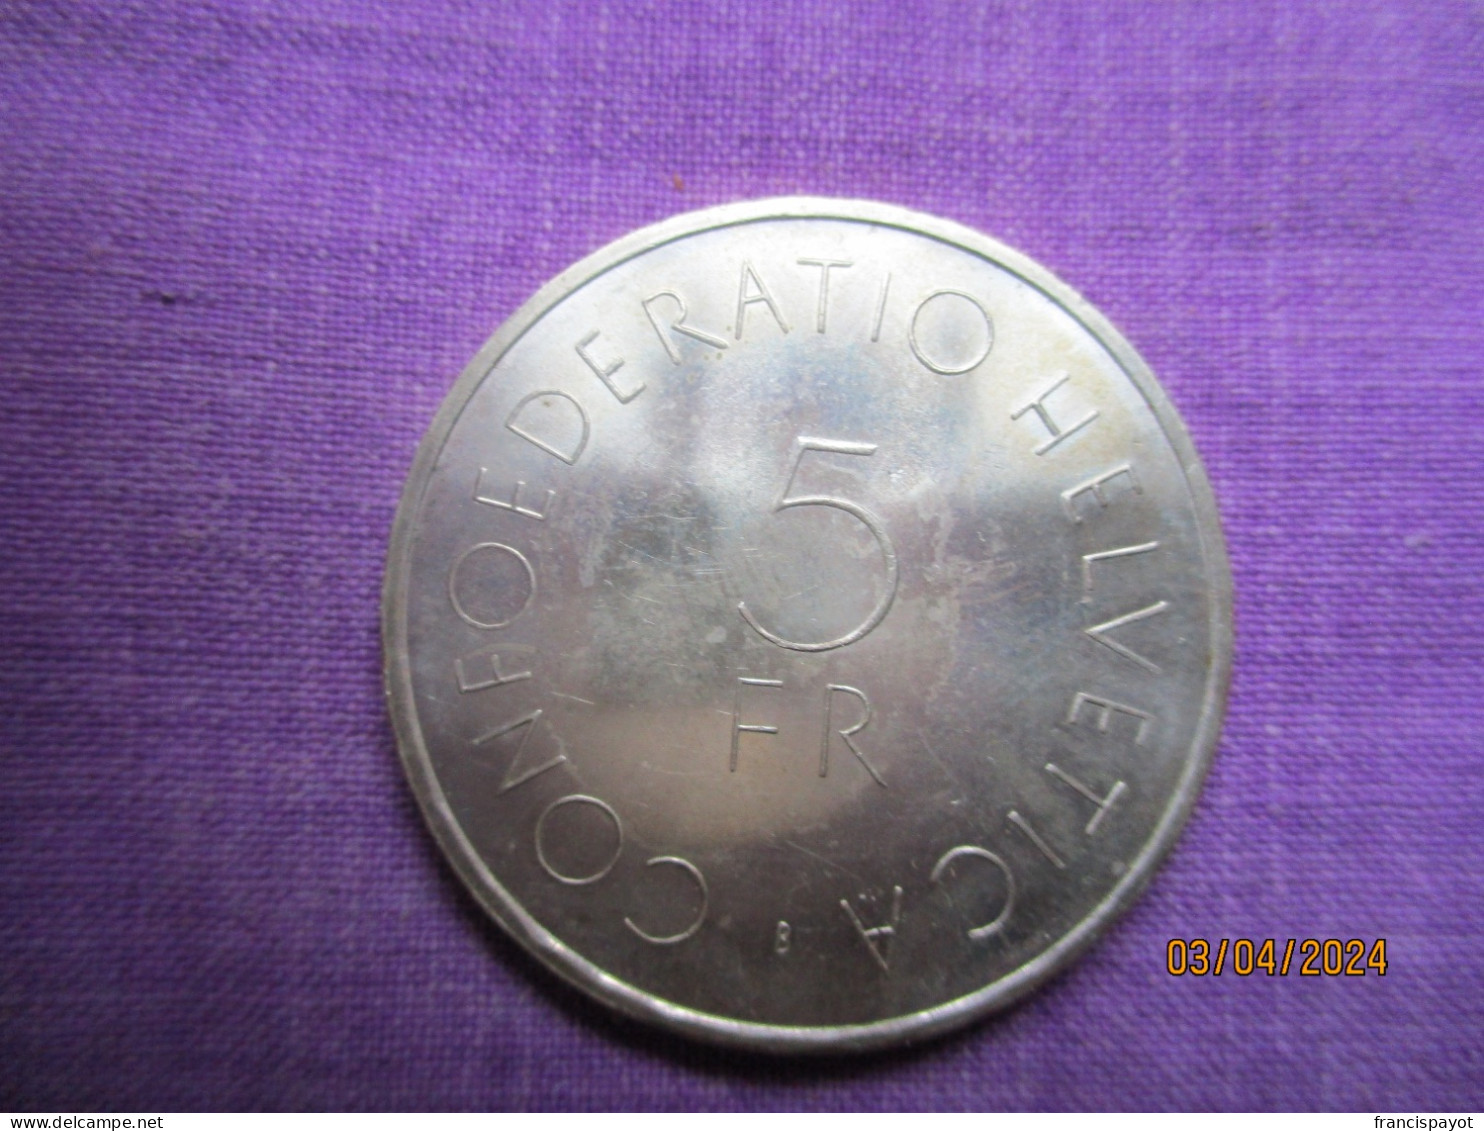 Switzerland: 5 Francs 1963 - Red Cross - Commemorative